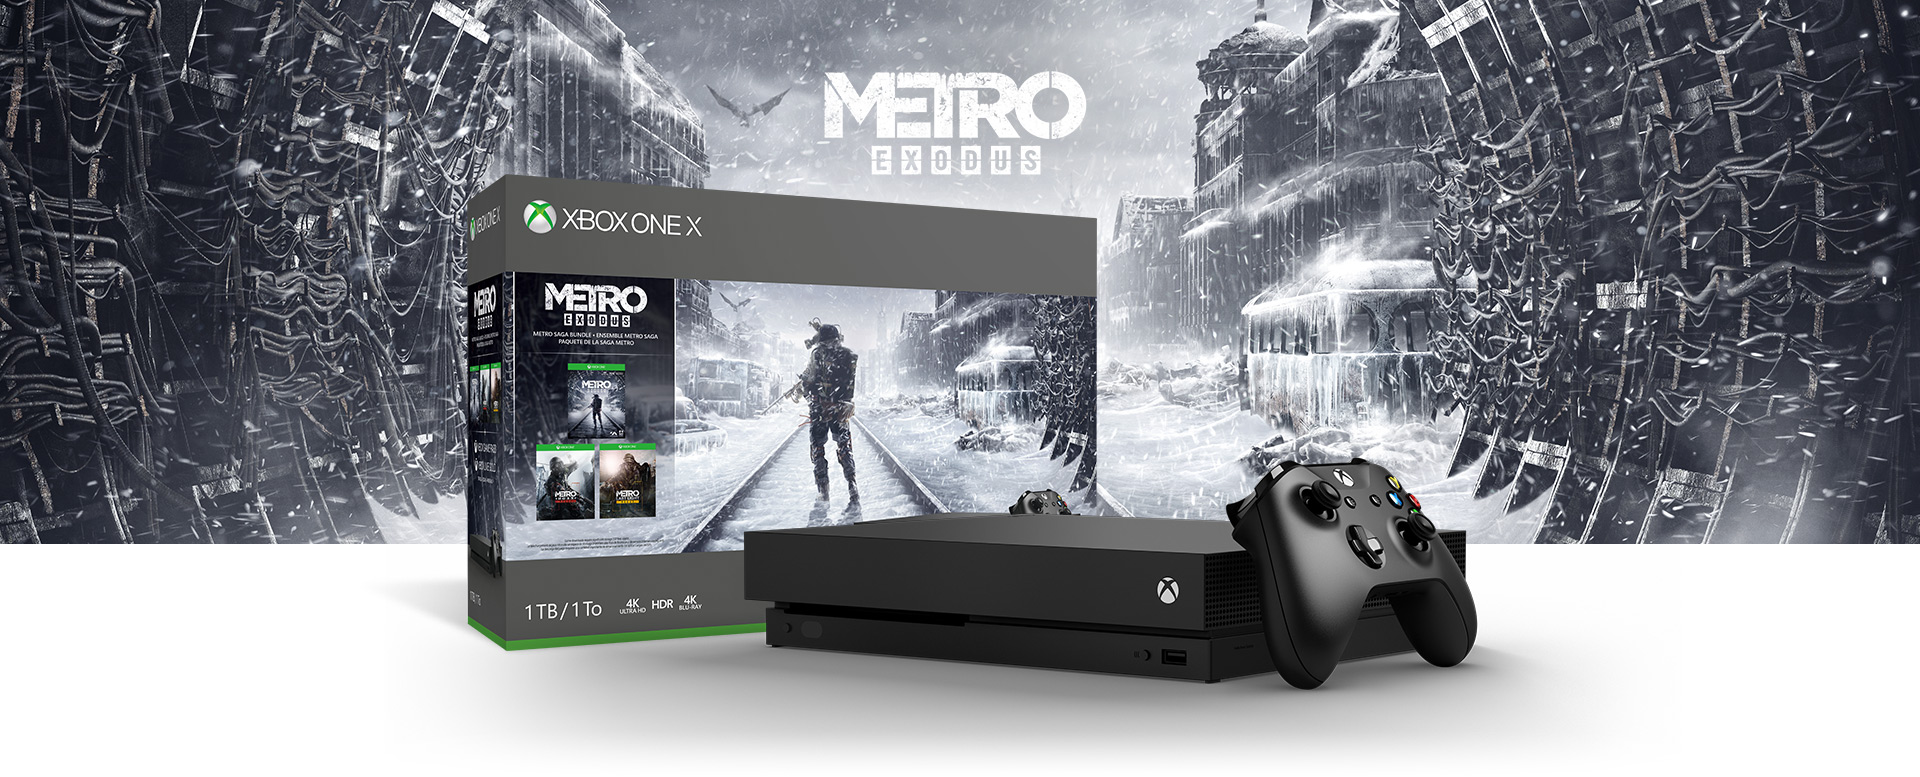 Xbox One X 1TB Metro Saga Bundle